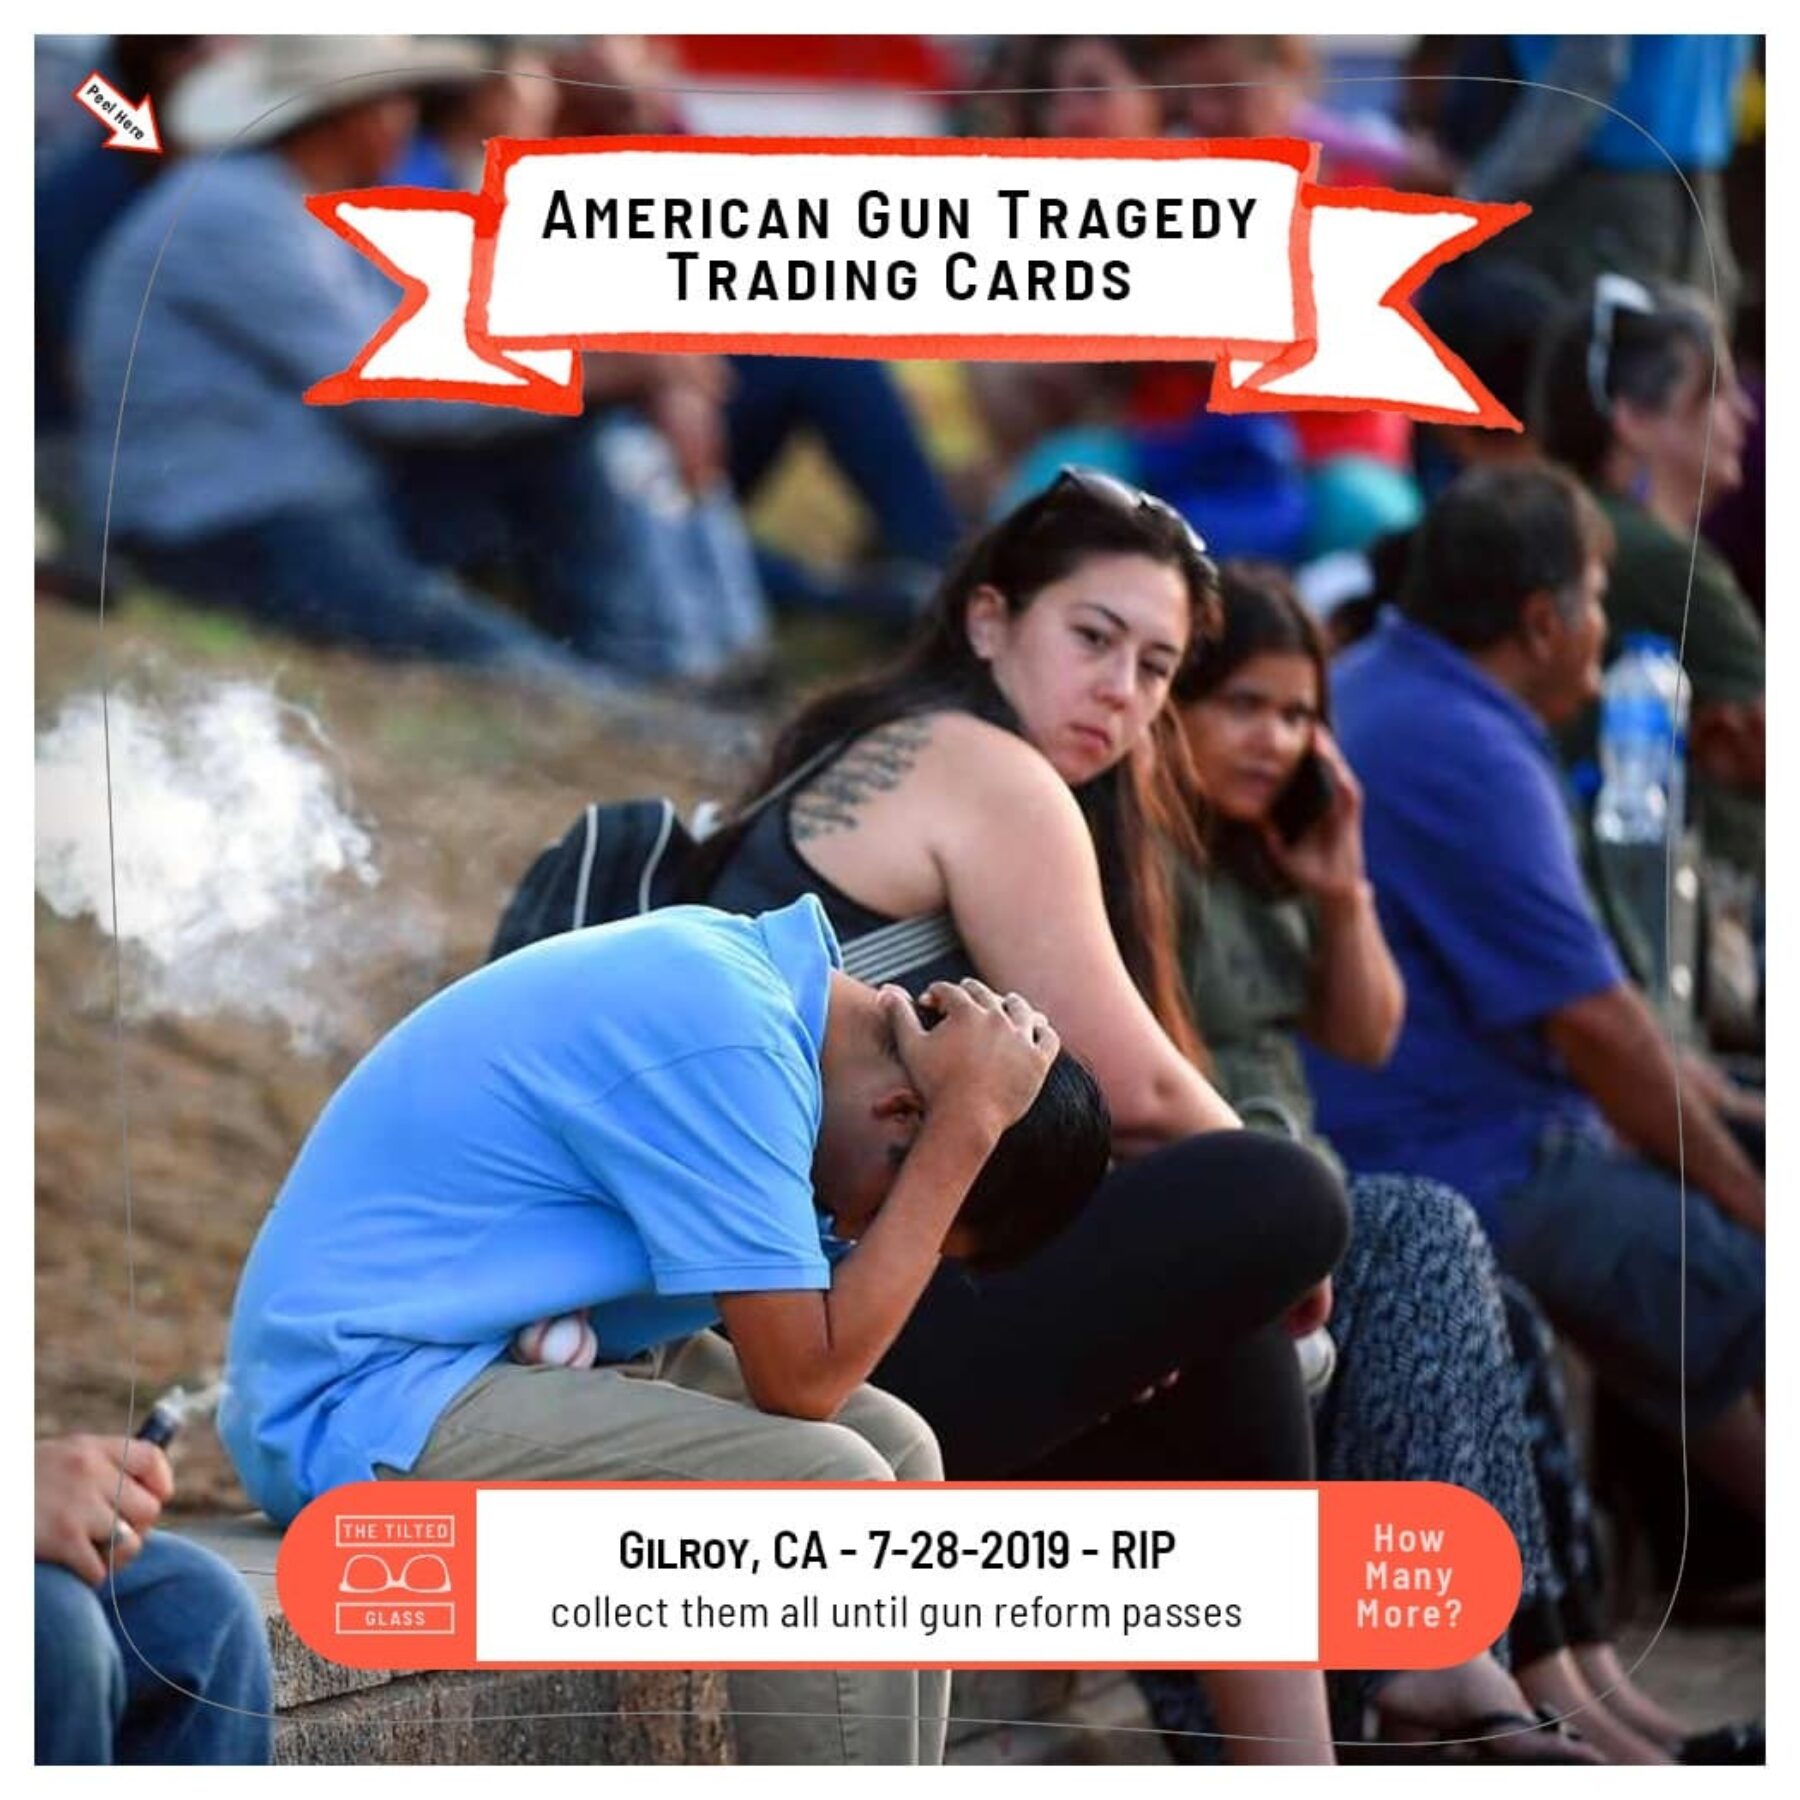 American Gun Tragedy Trading Cards - 7-28-2019 - Gilroy, CA